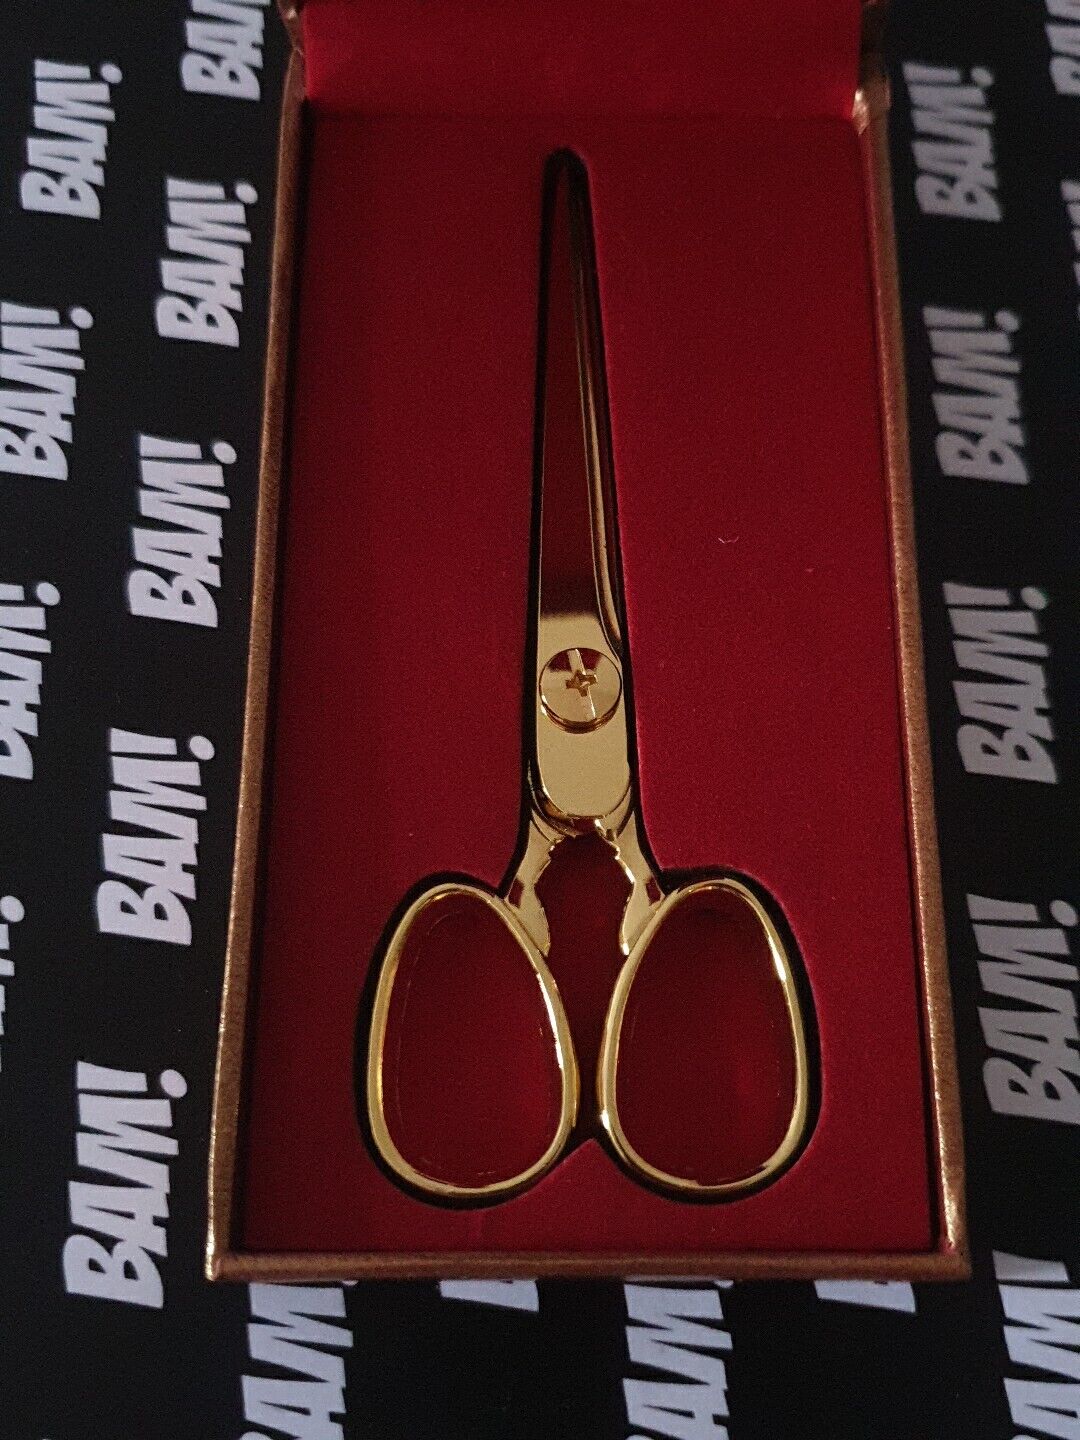 Bam Horror Exclusive Prop Replica Scissors From The Movie *US*